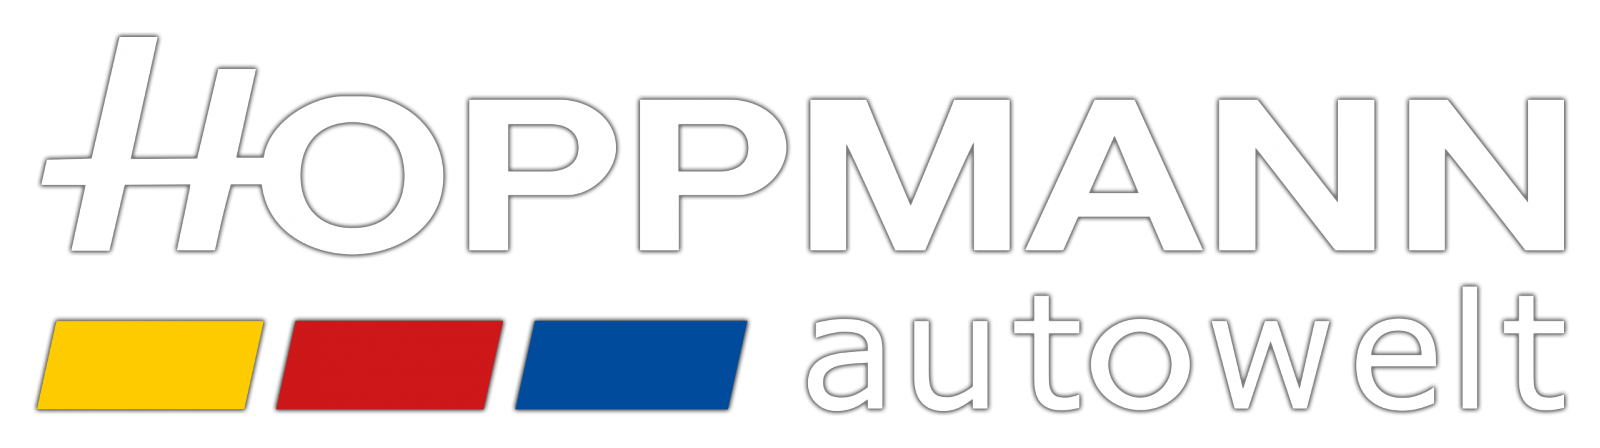 Hoppmann Automobil Herborn - VW / Audi - Vertragswerkstatt logo